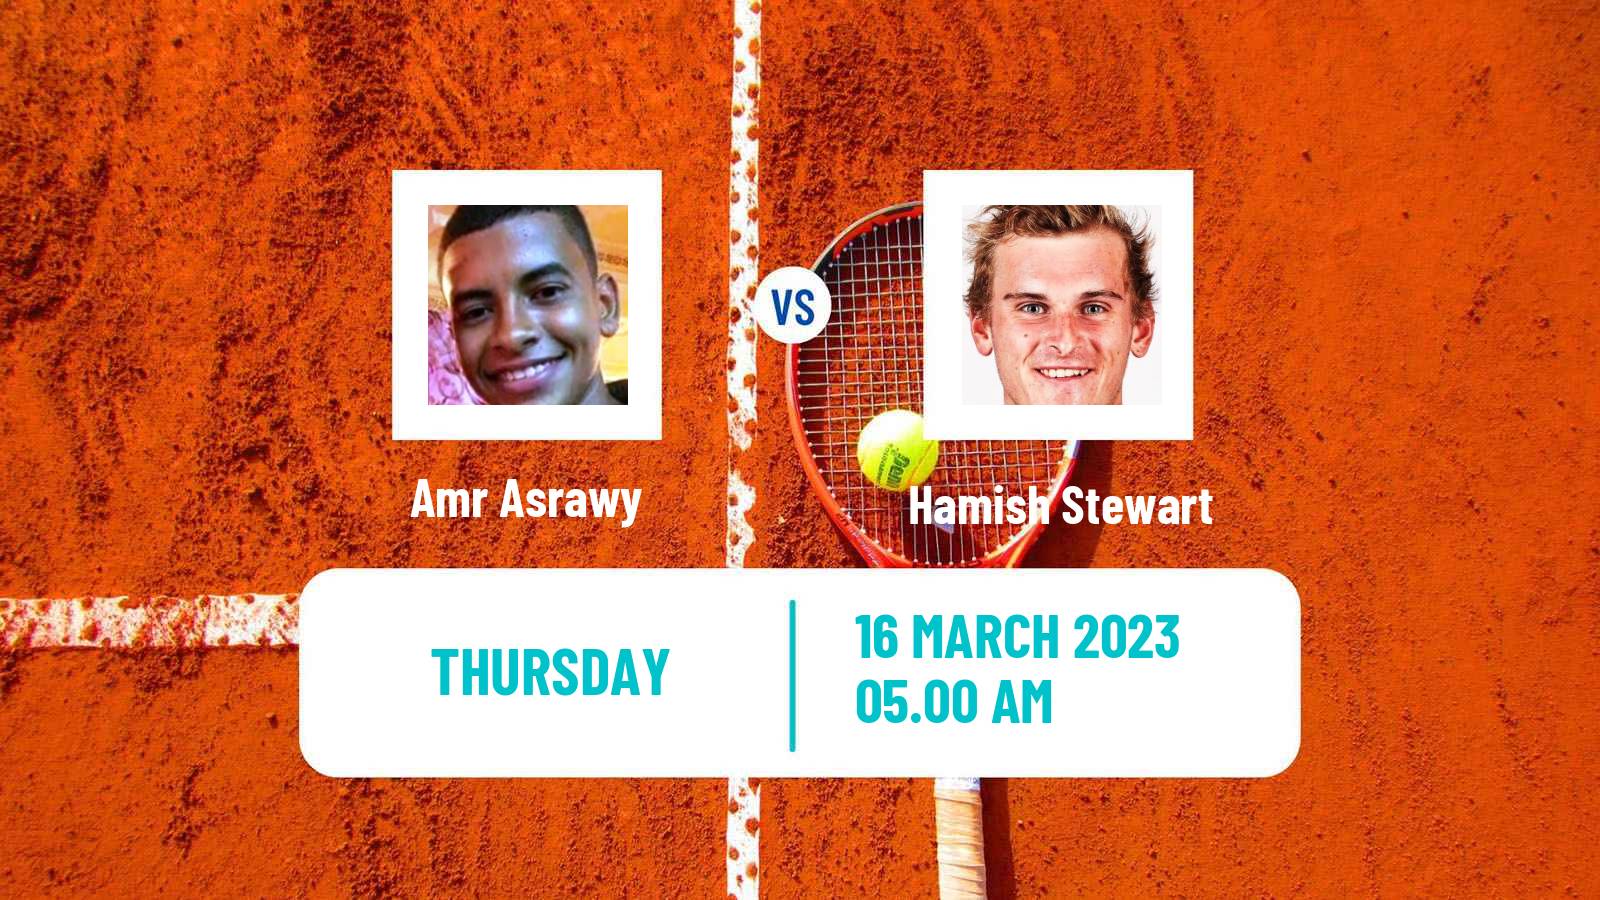 Tennis ITF Tournaments Amr Asrawy - Hamish Stewart